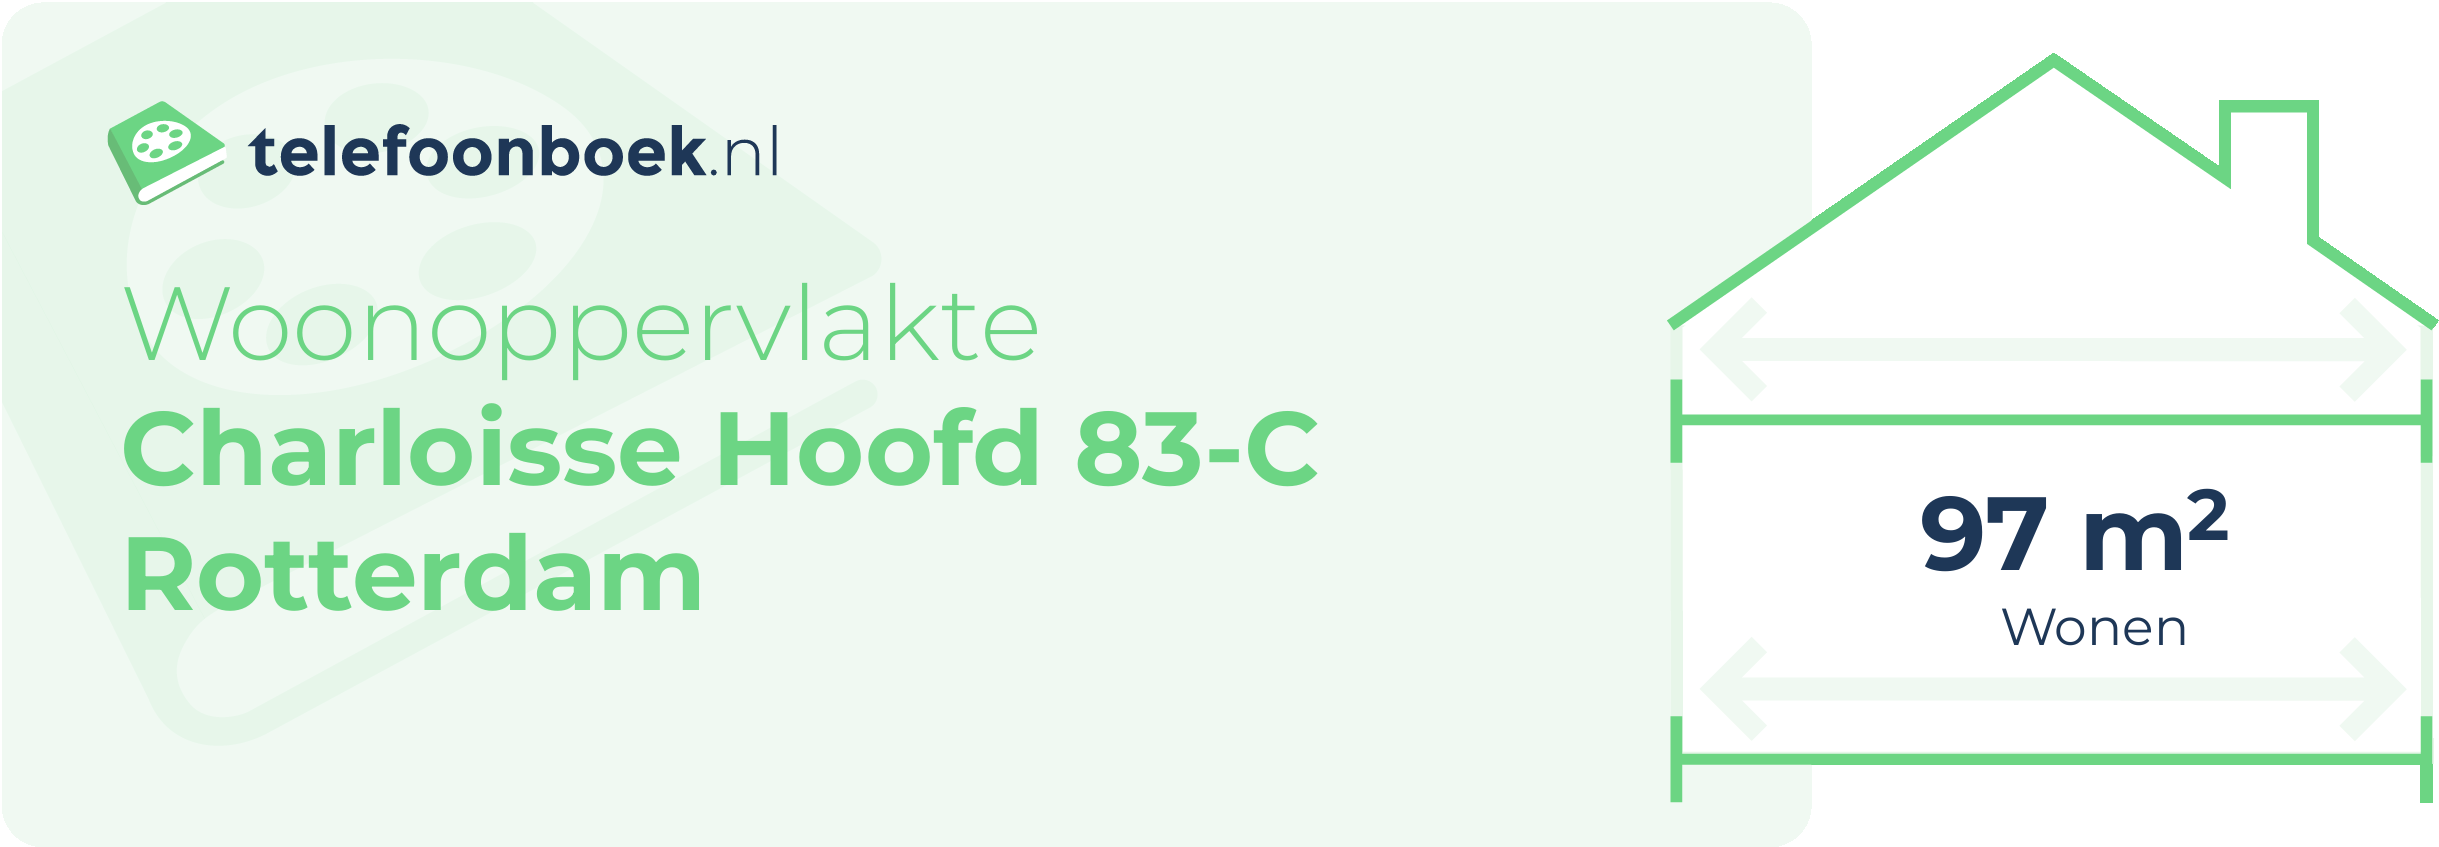 Woonoppervlakte Charloisse Hoofd 83-C Rotterdam